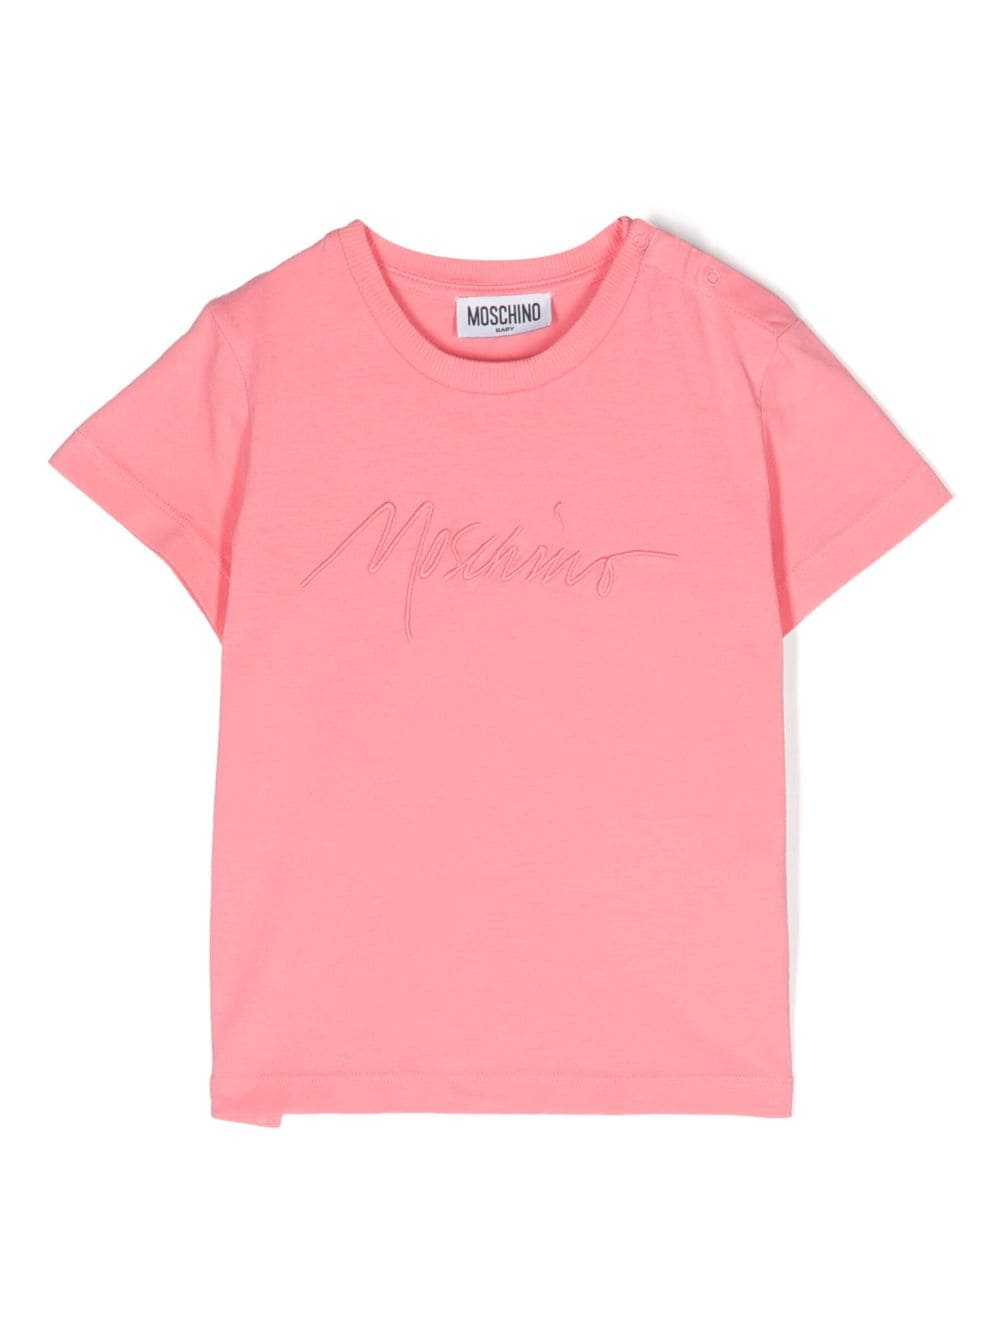 Moschino Kids logo embroidery T-shirt - Pink